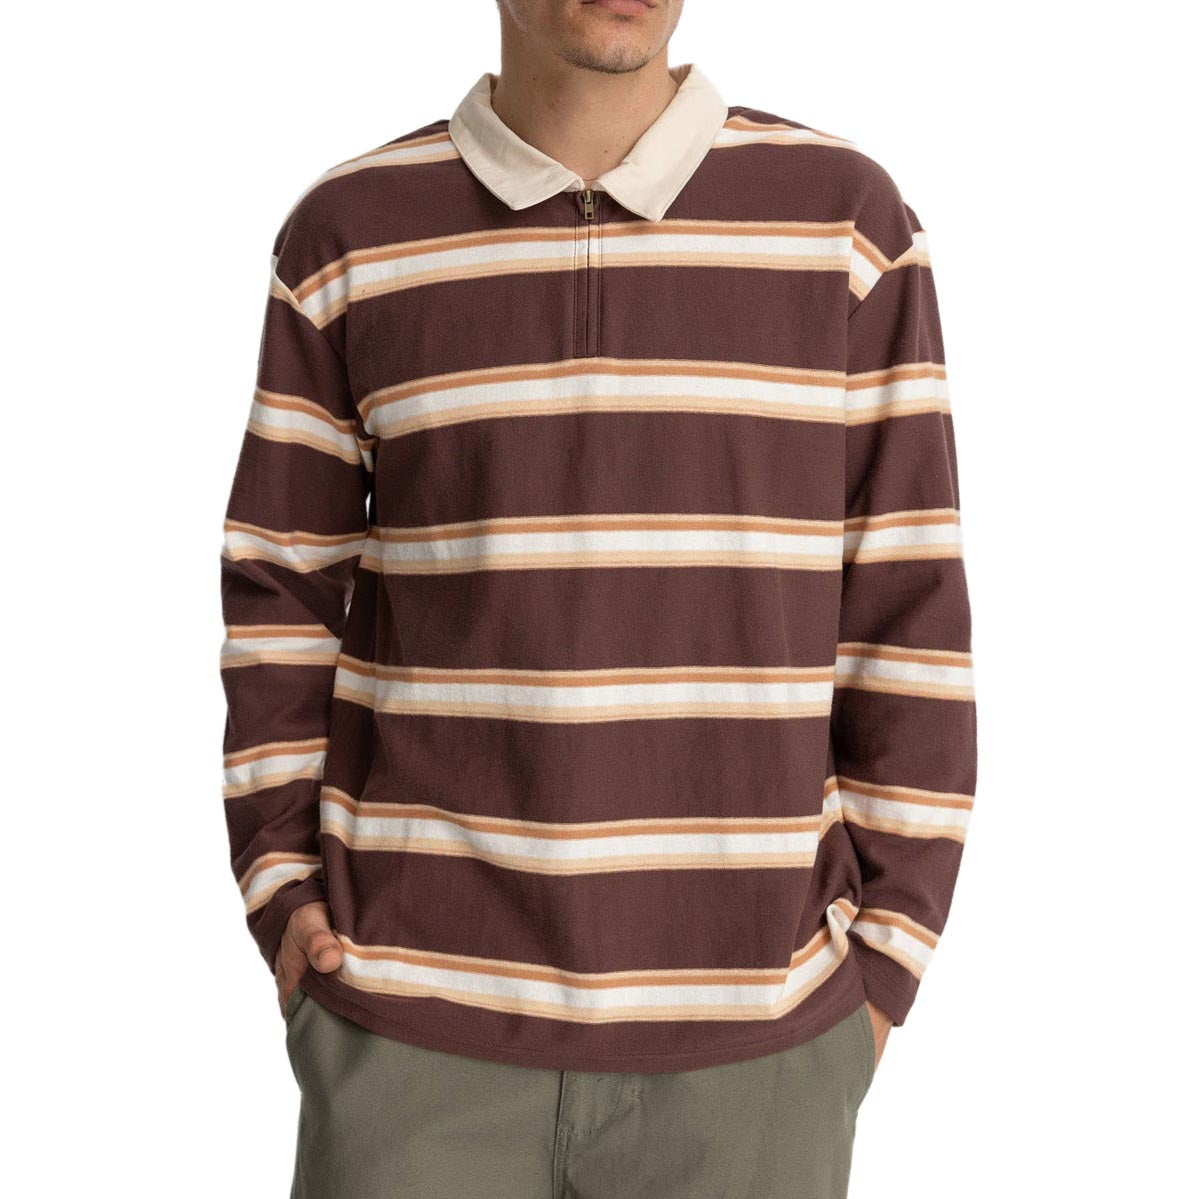 Rhythm Vintage Stripe Polo Long Sleeve Shirt - Chocolate image 1